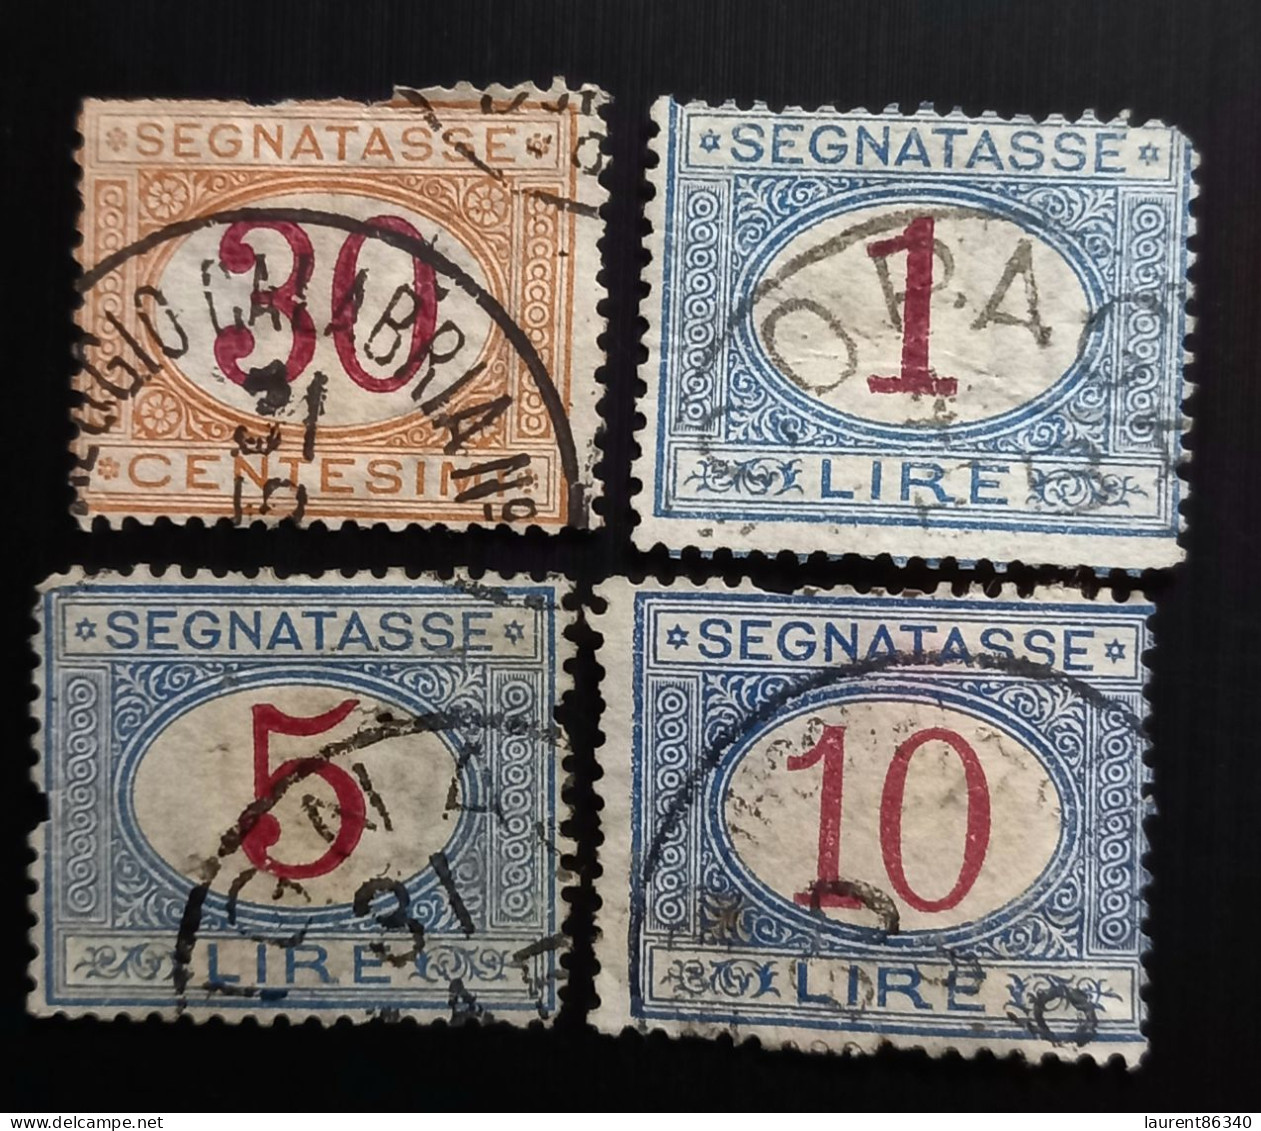 Italie 1870 -1894 Timbre D'affranchissement Numeral Stamps - New Design Used - Interi Postali